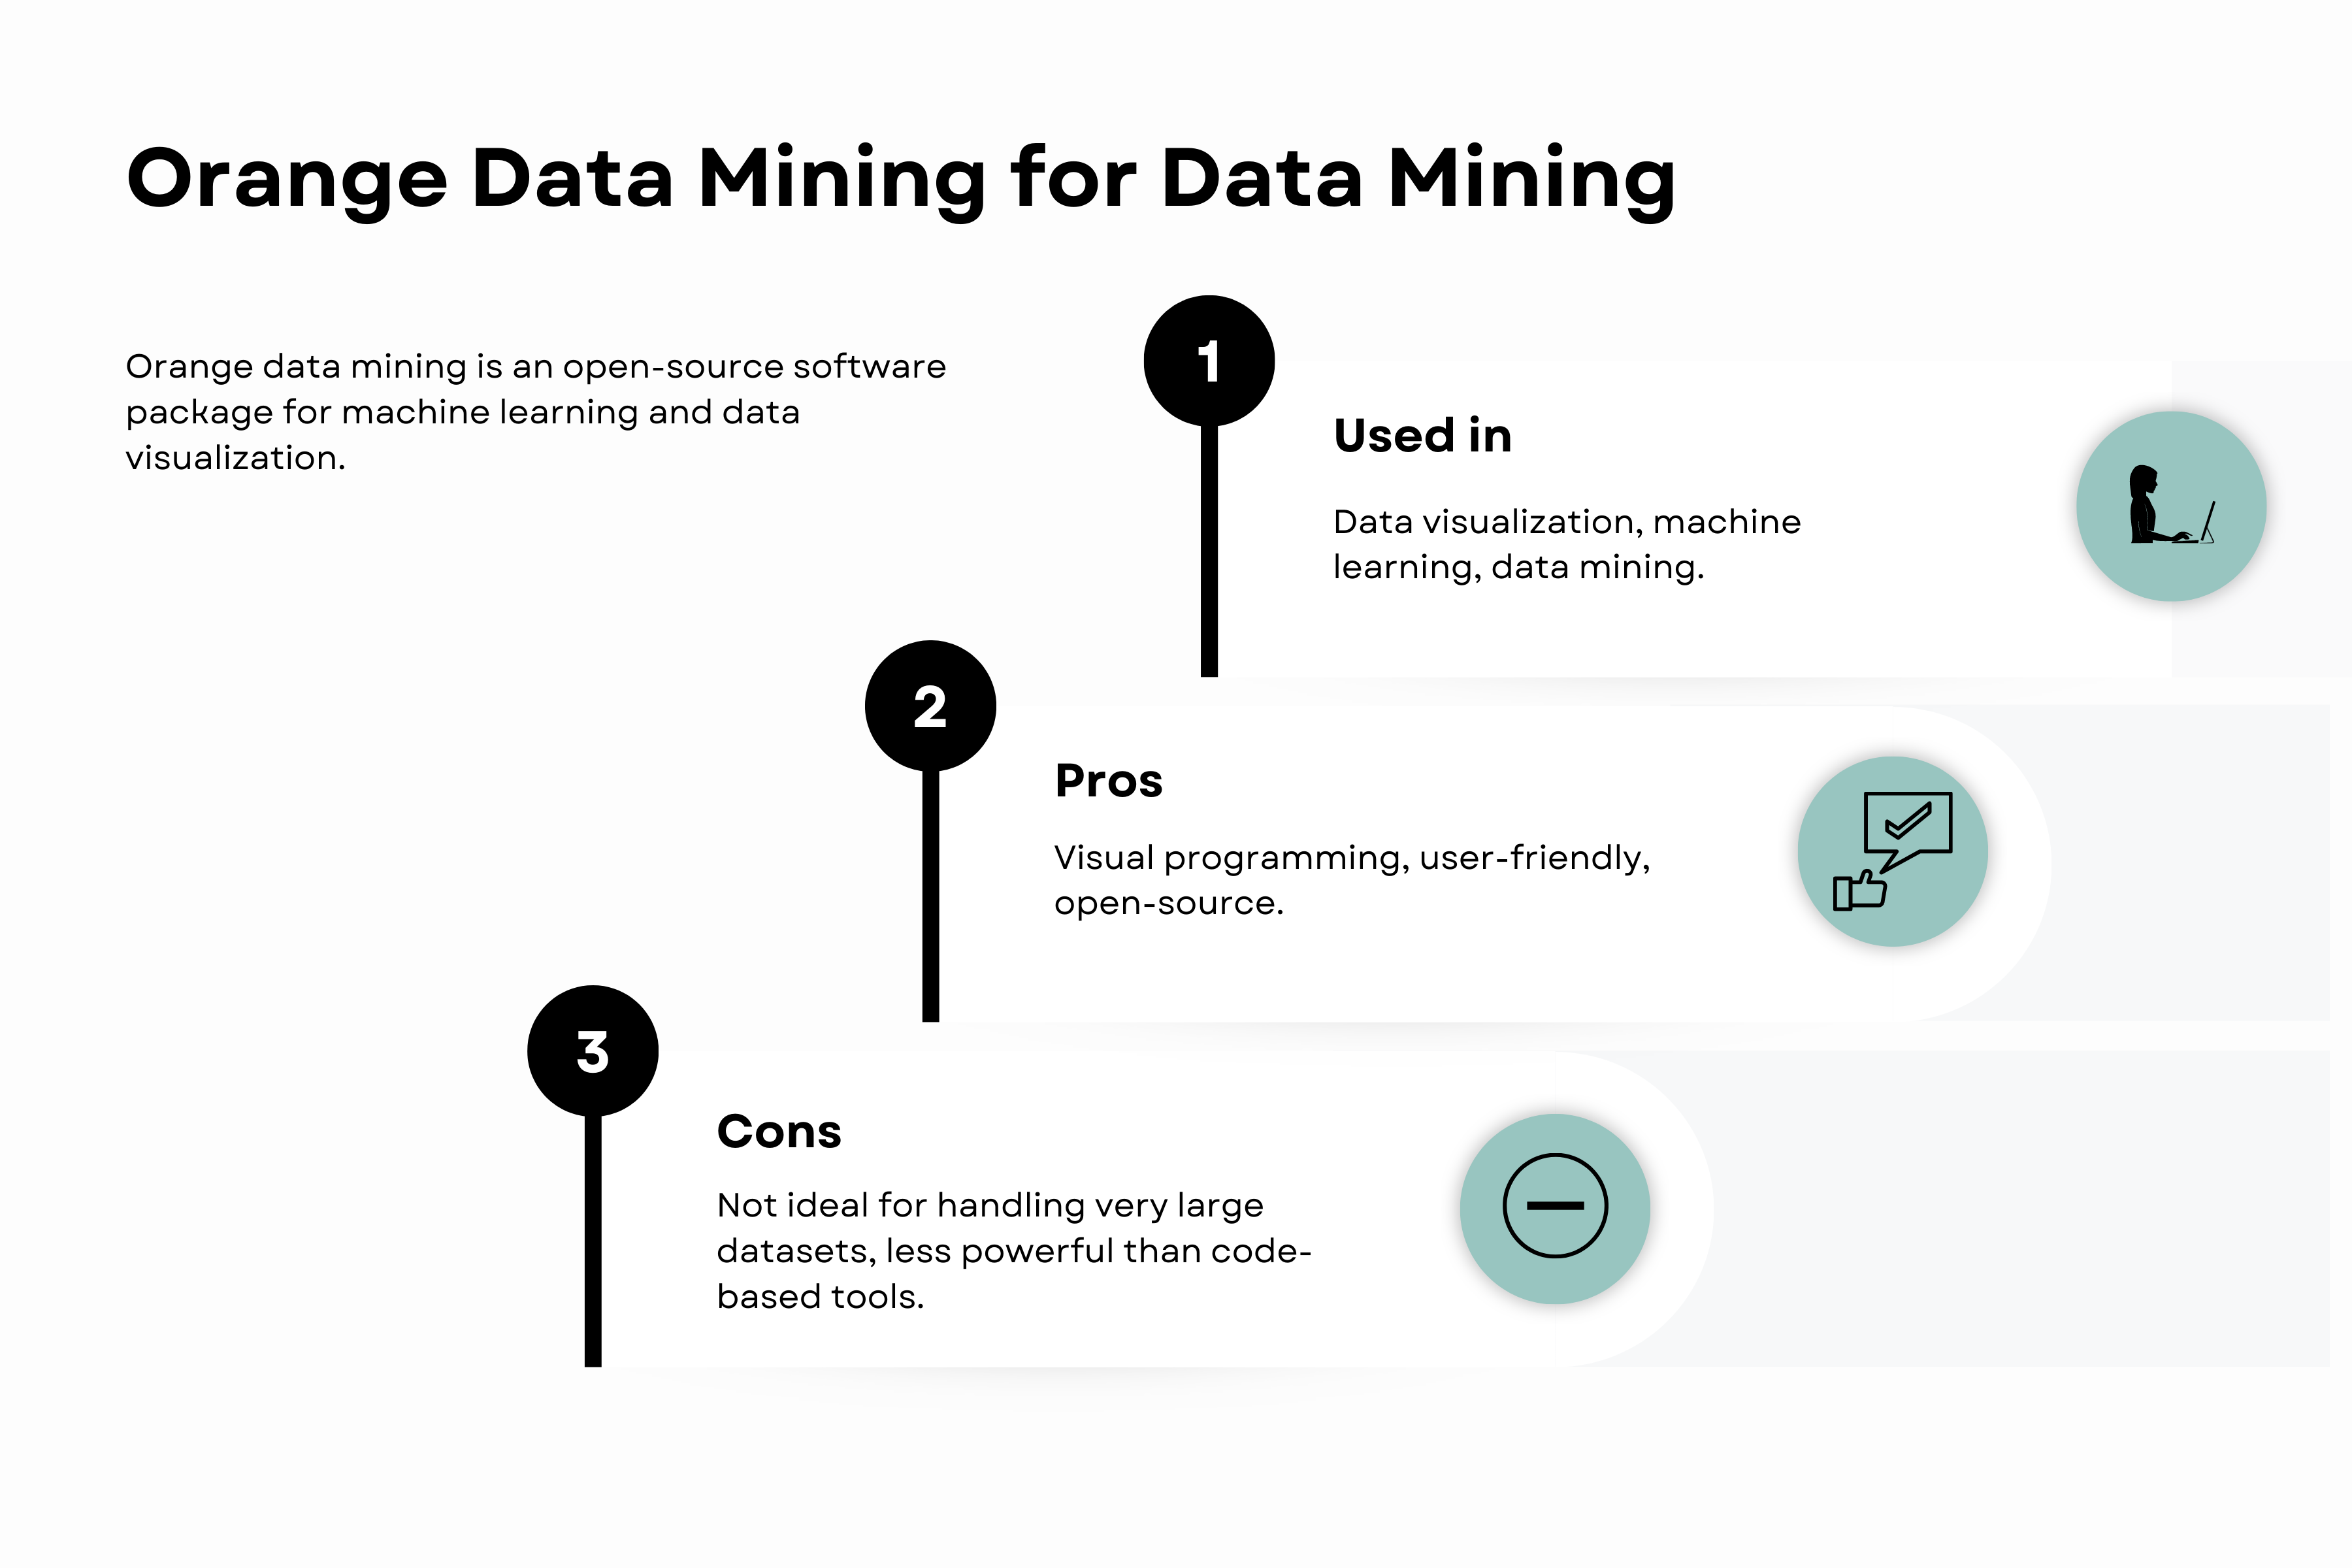 Orange Data Mining for data mining